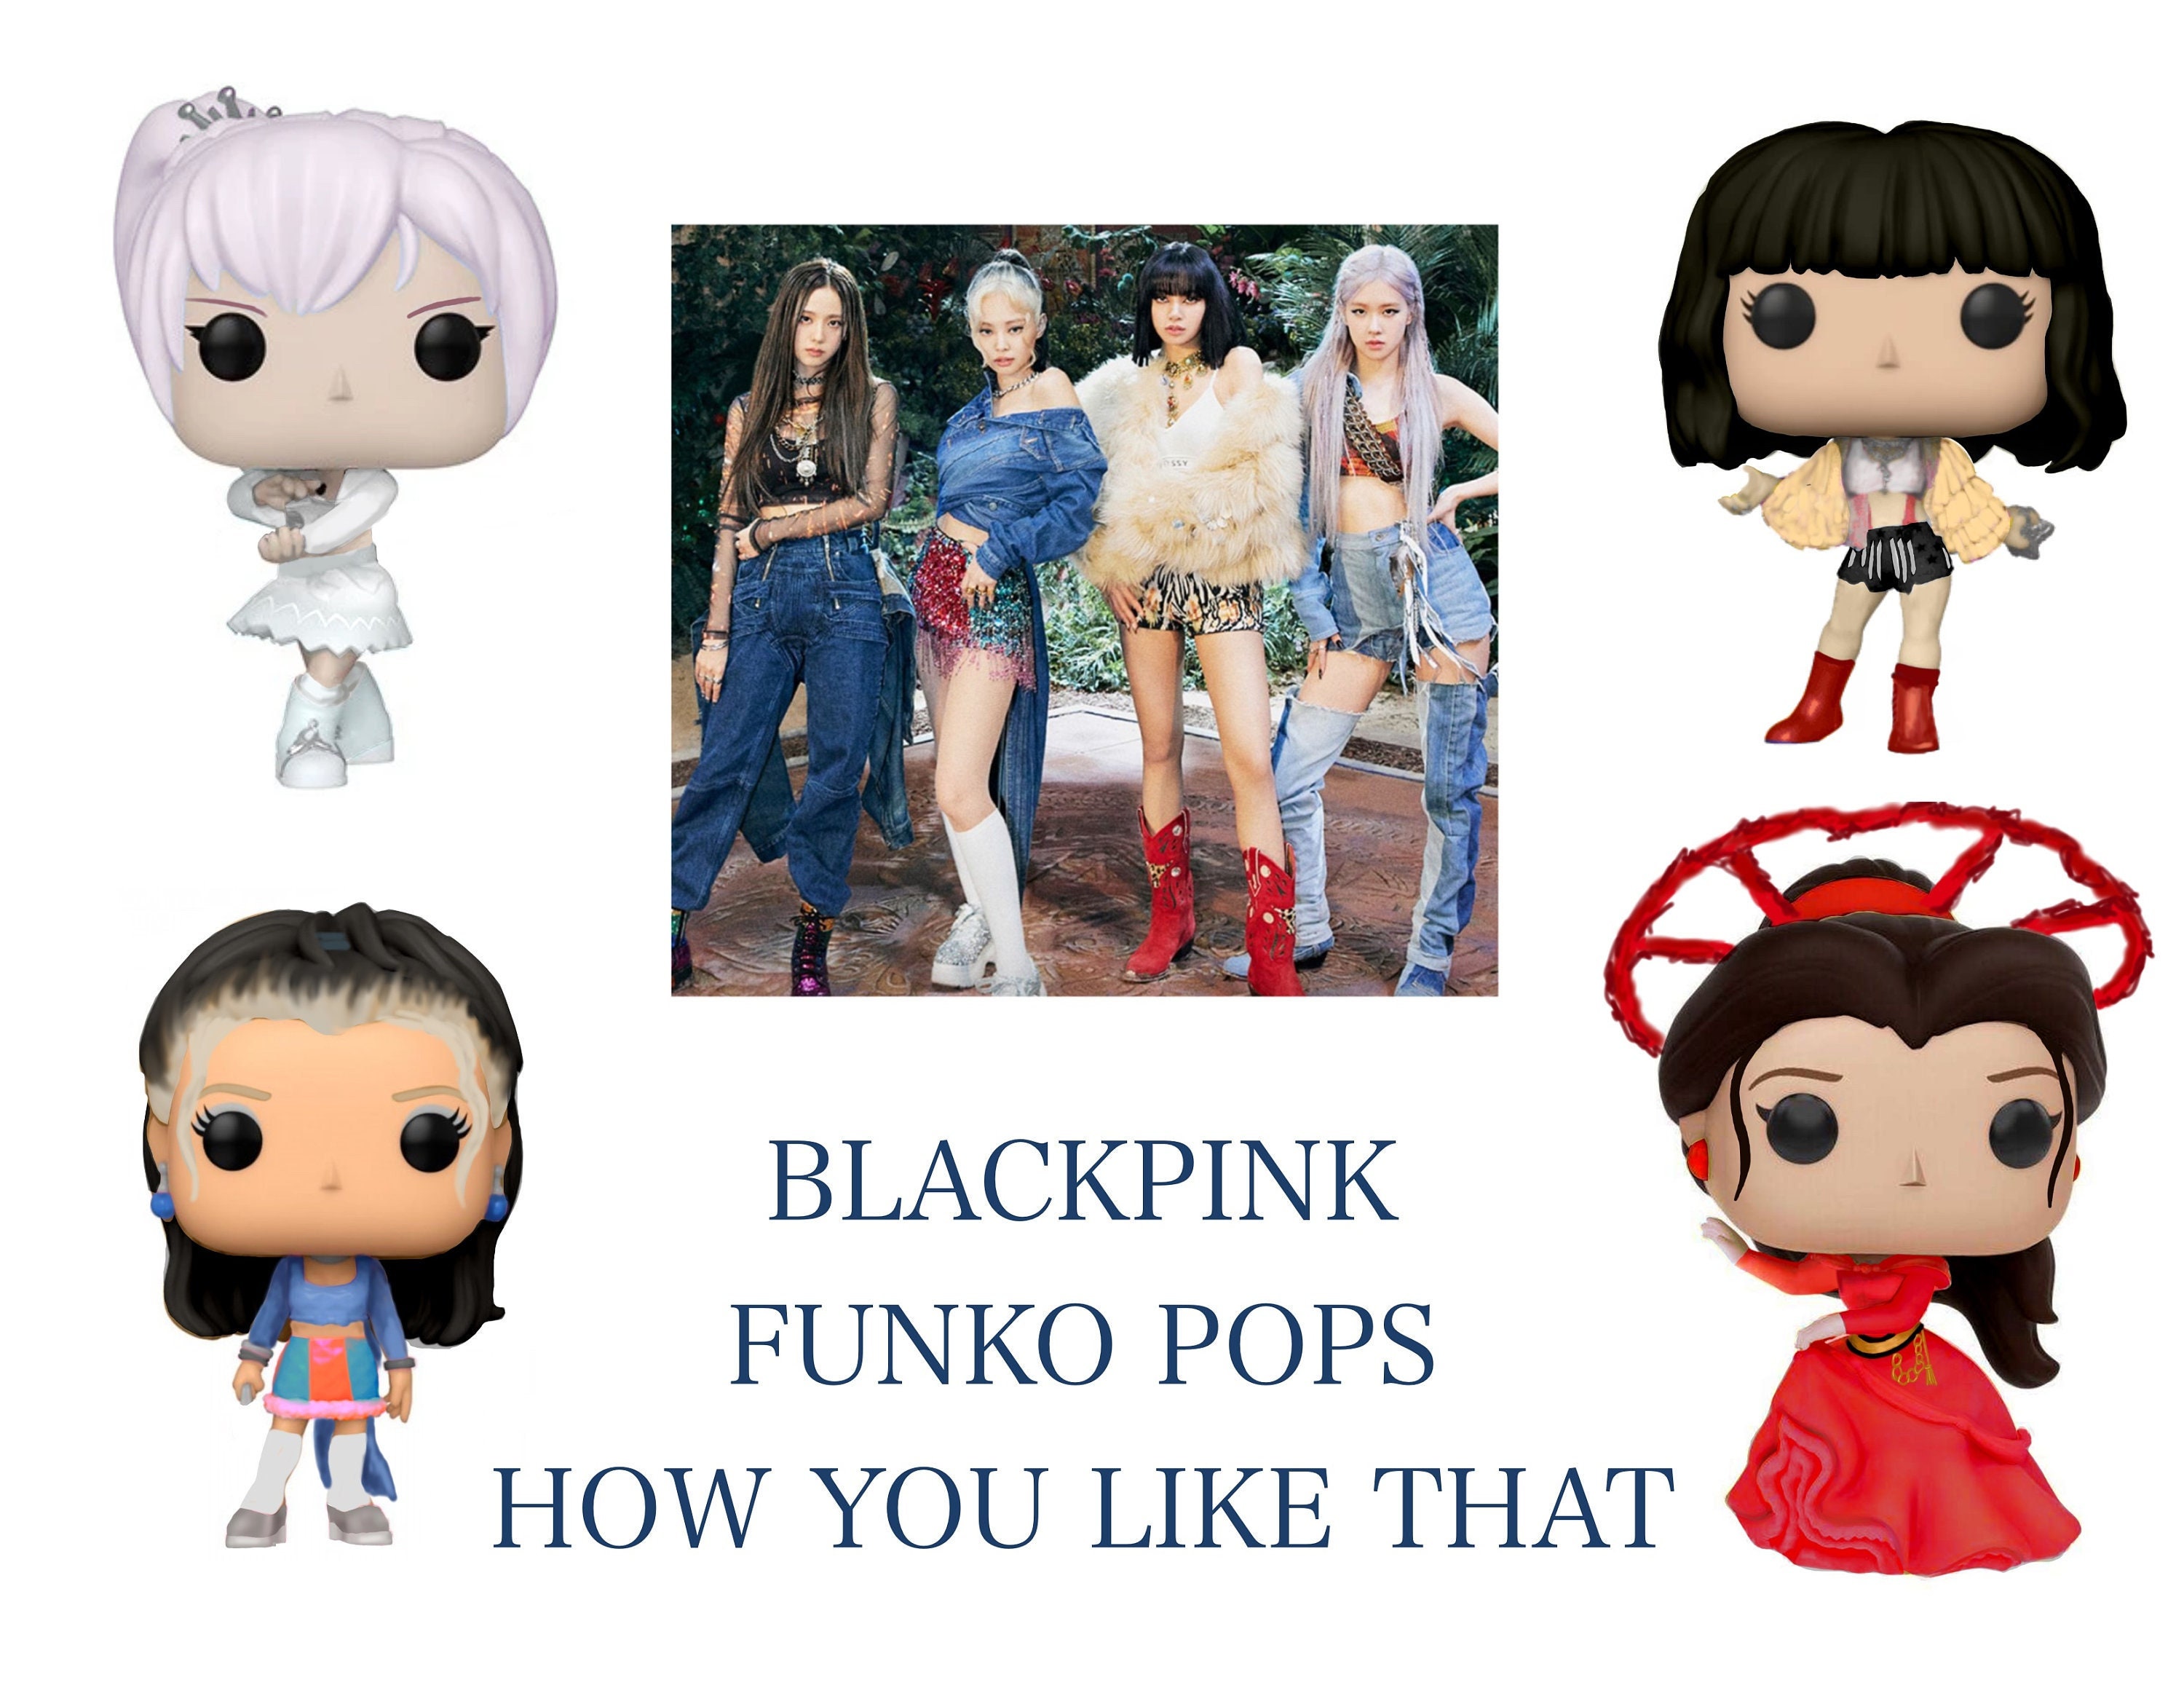 Blackpink Funko Pops ‘How You Like That’